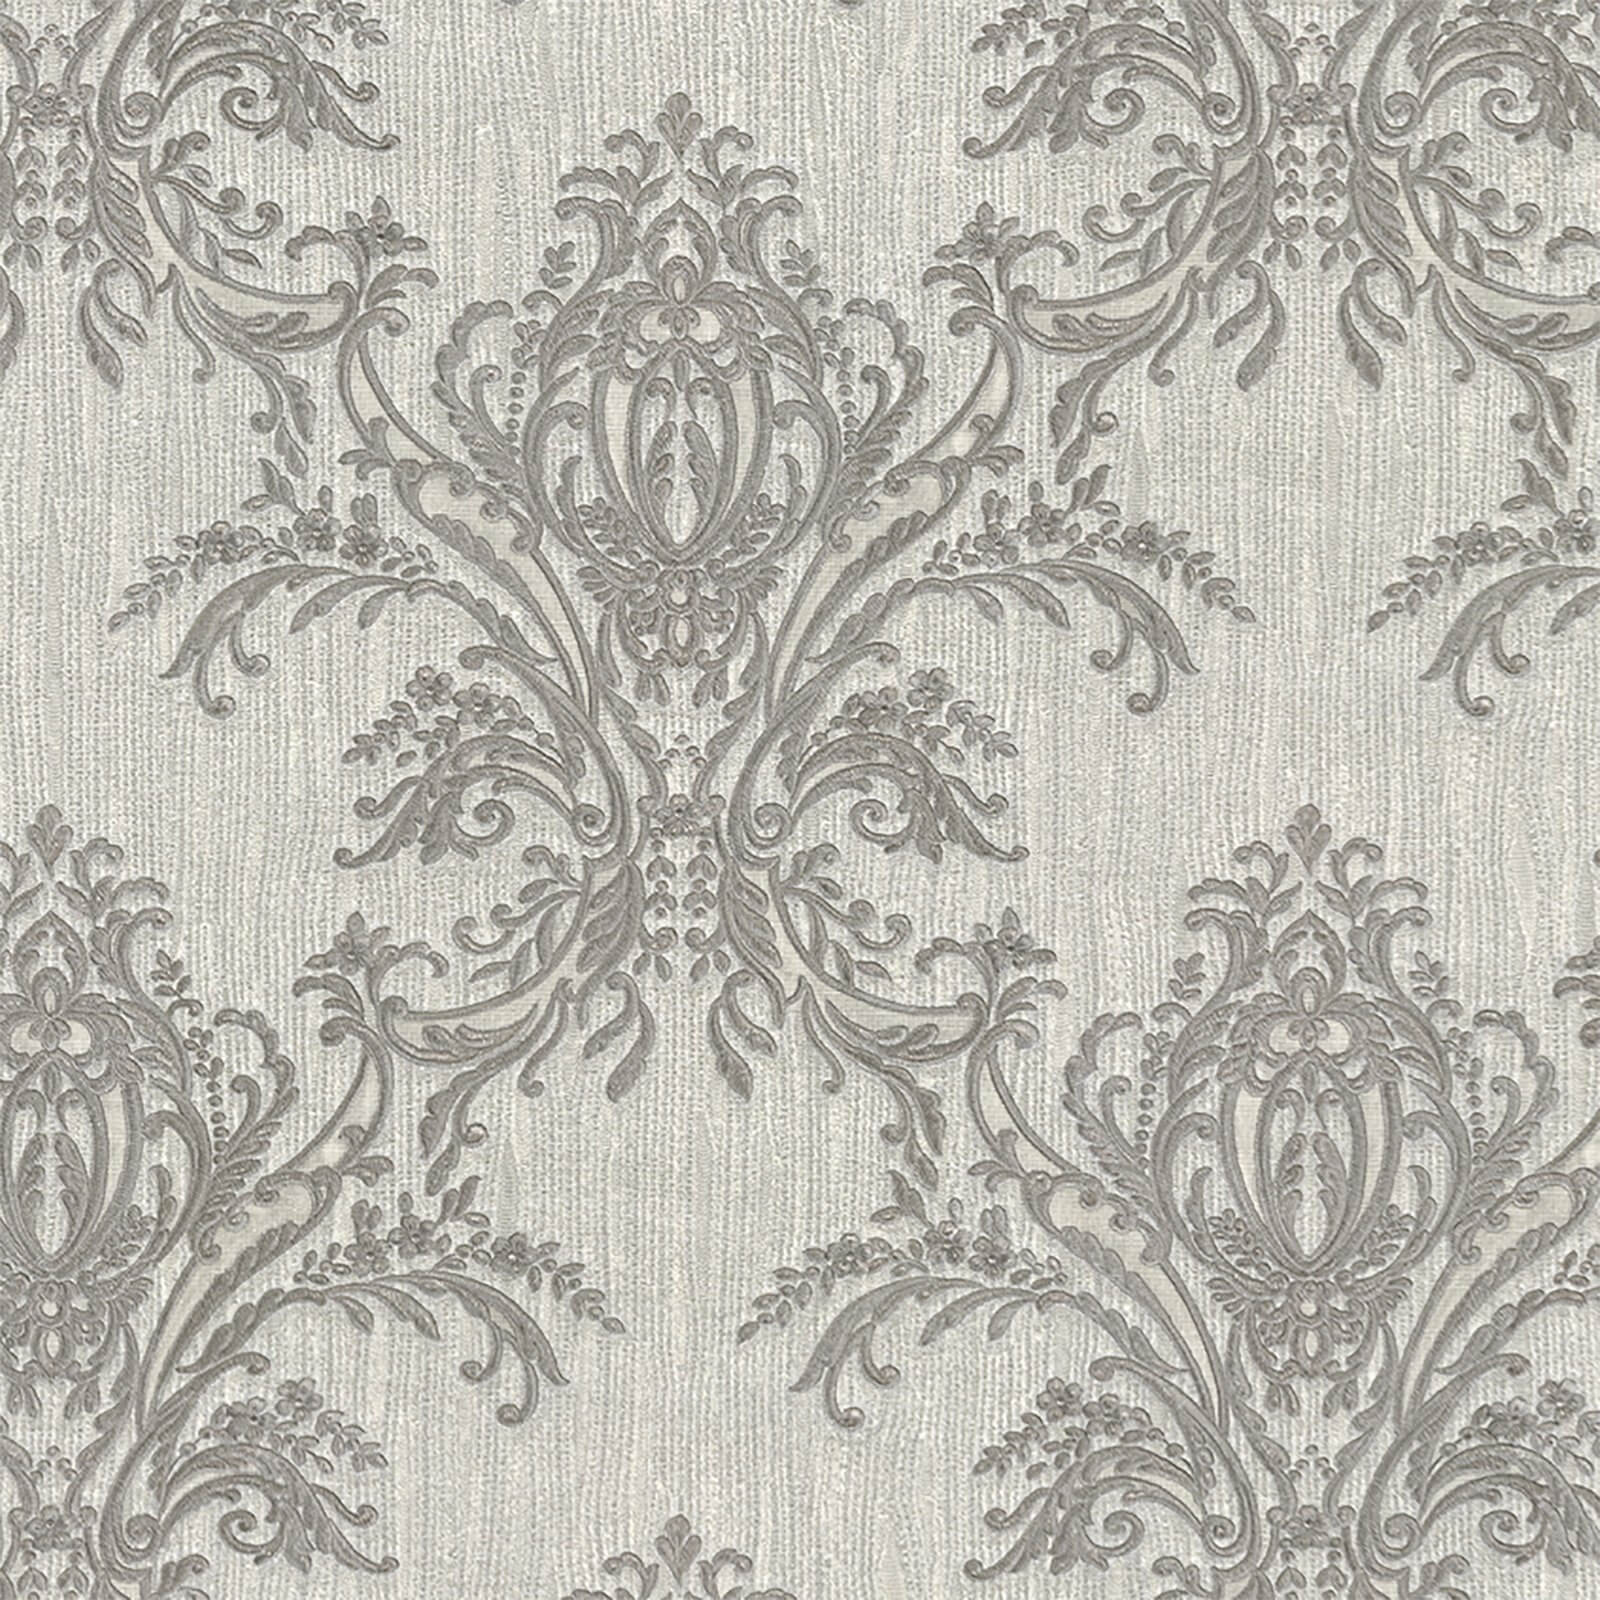 Belgravia Decor Sofia Damask Textured Vinyl Metallic Silver and Grey Wallpaper